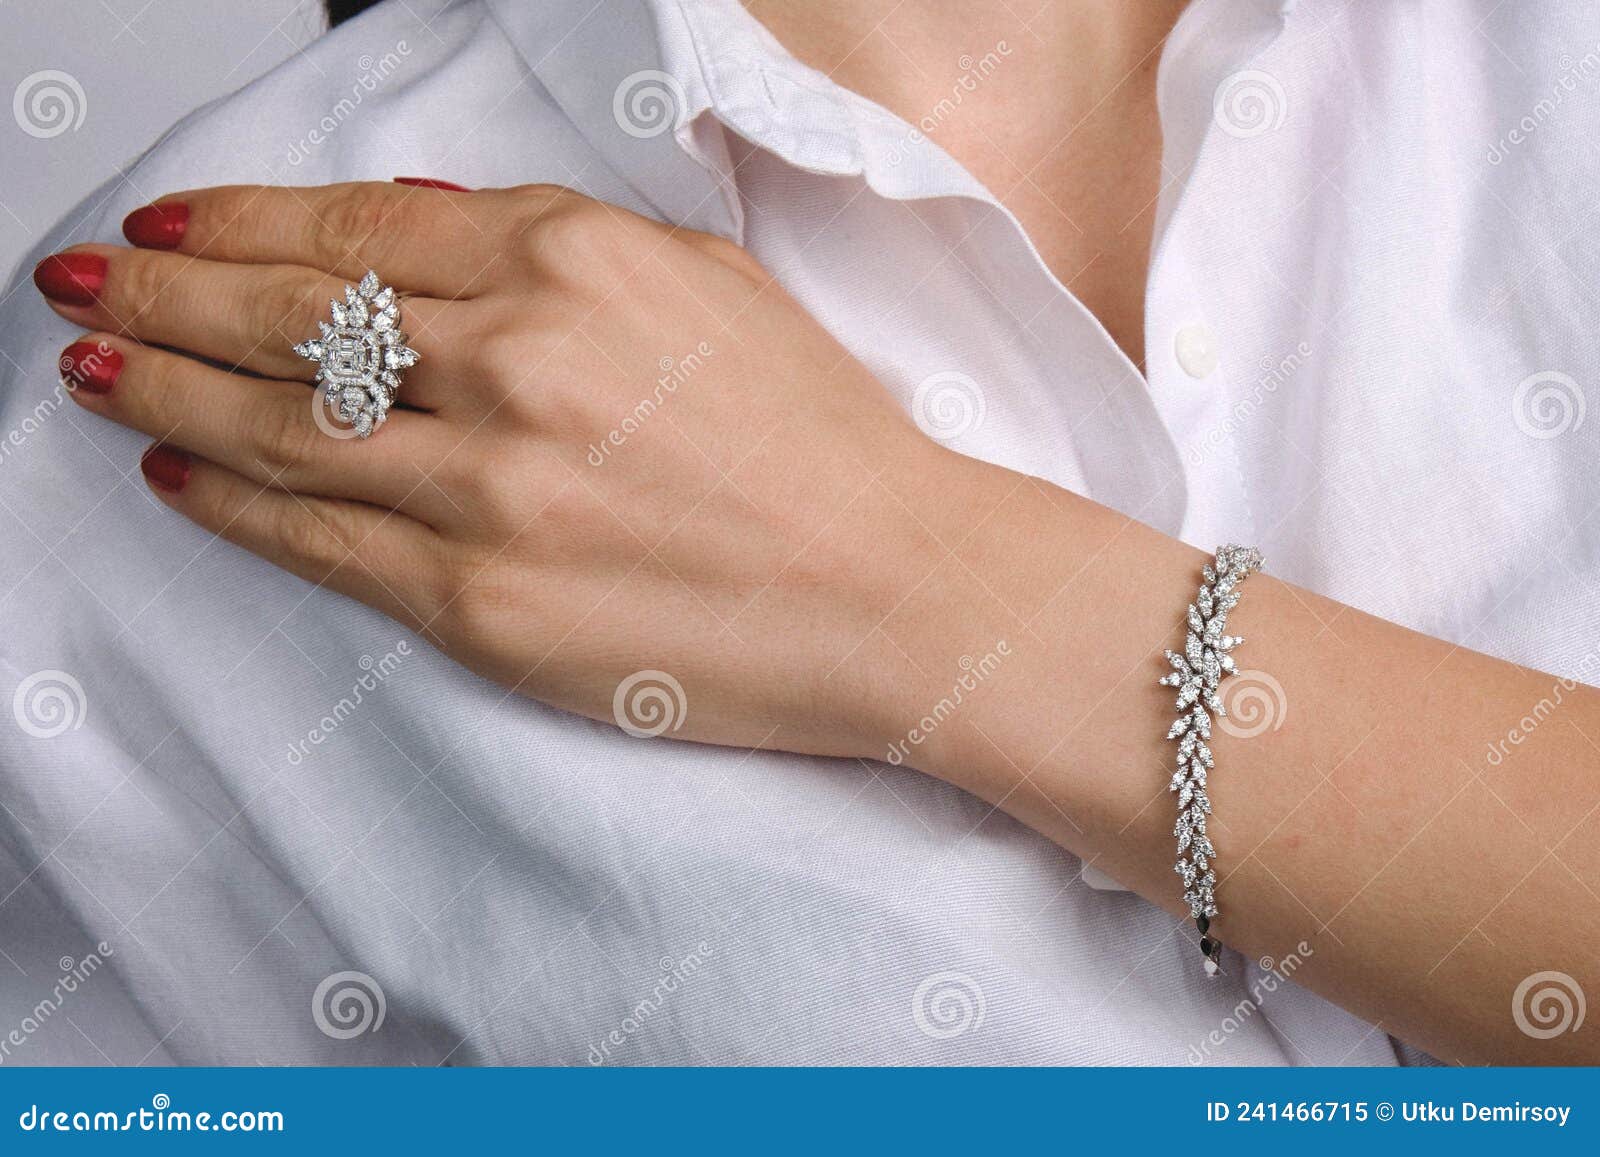 Diamond Jewelry Luxury And Fashion Jewelry Stock Image Image Of